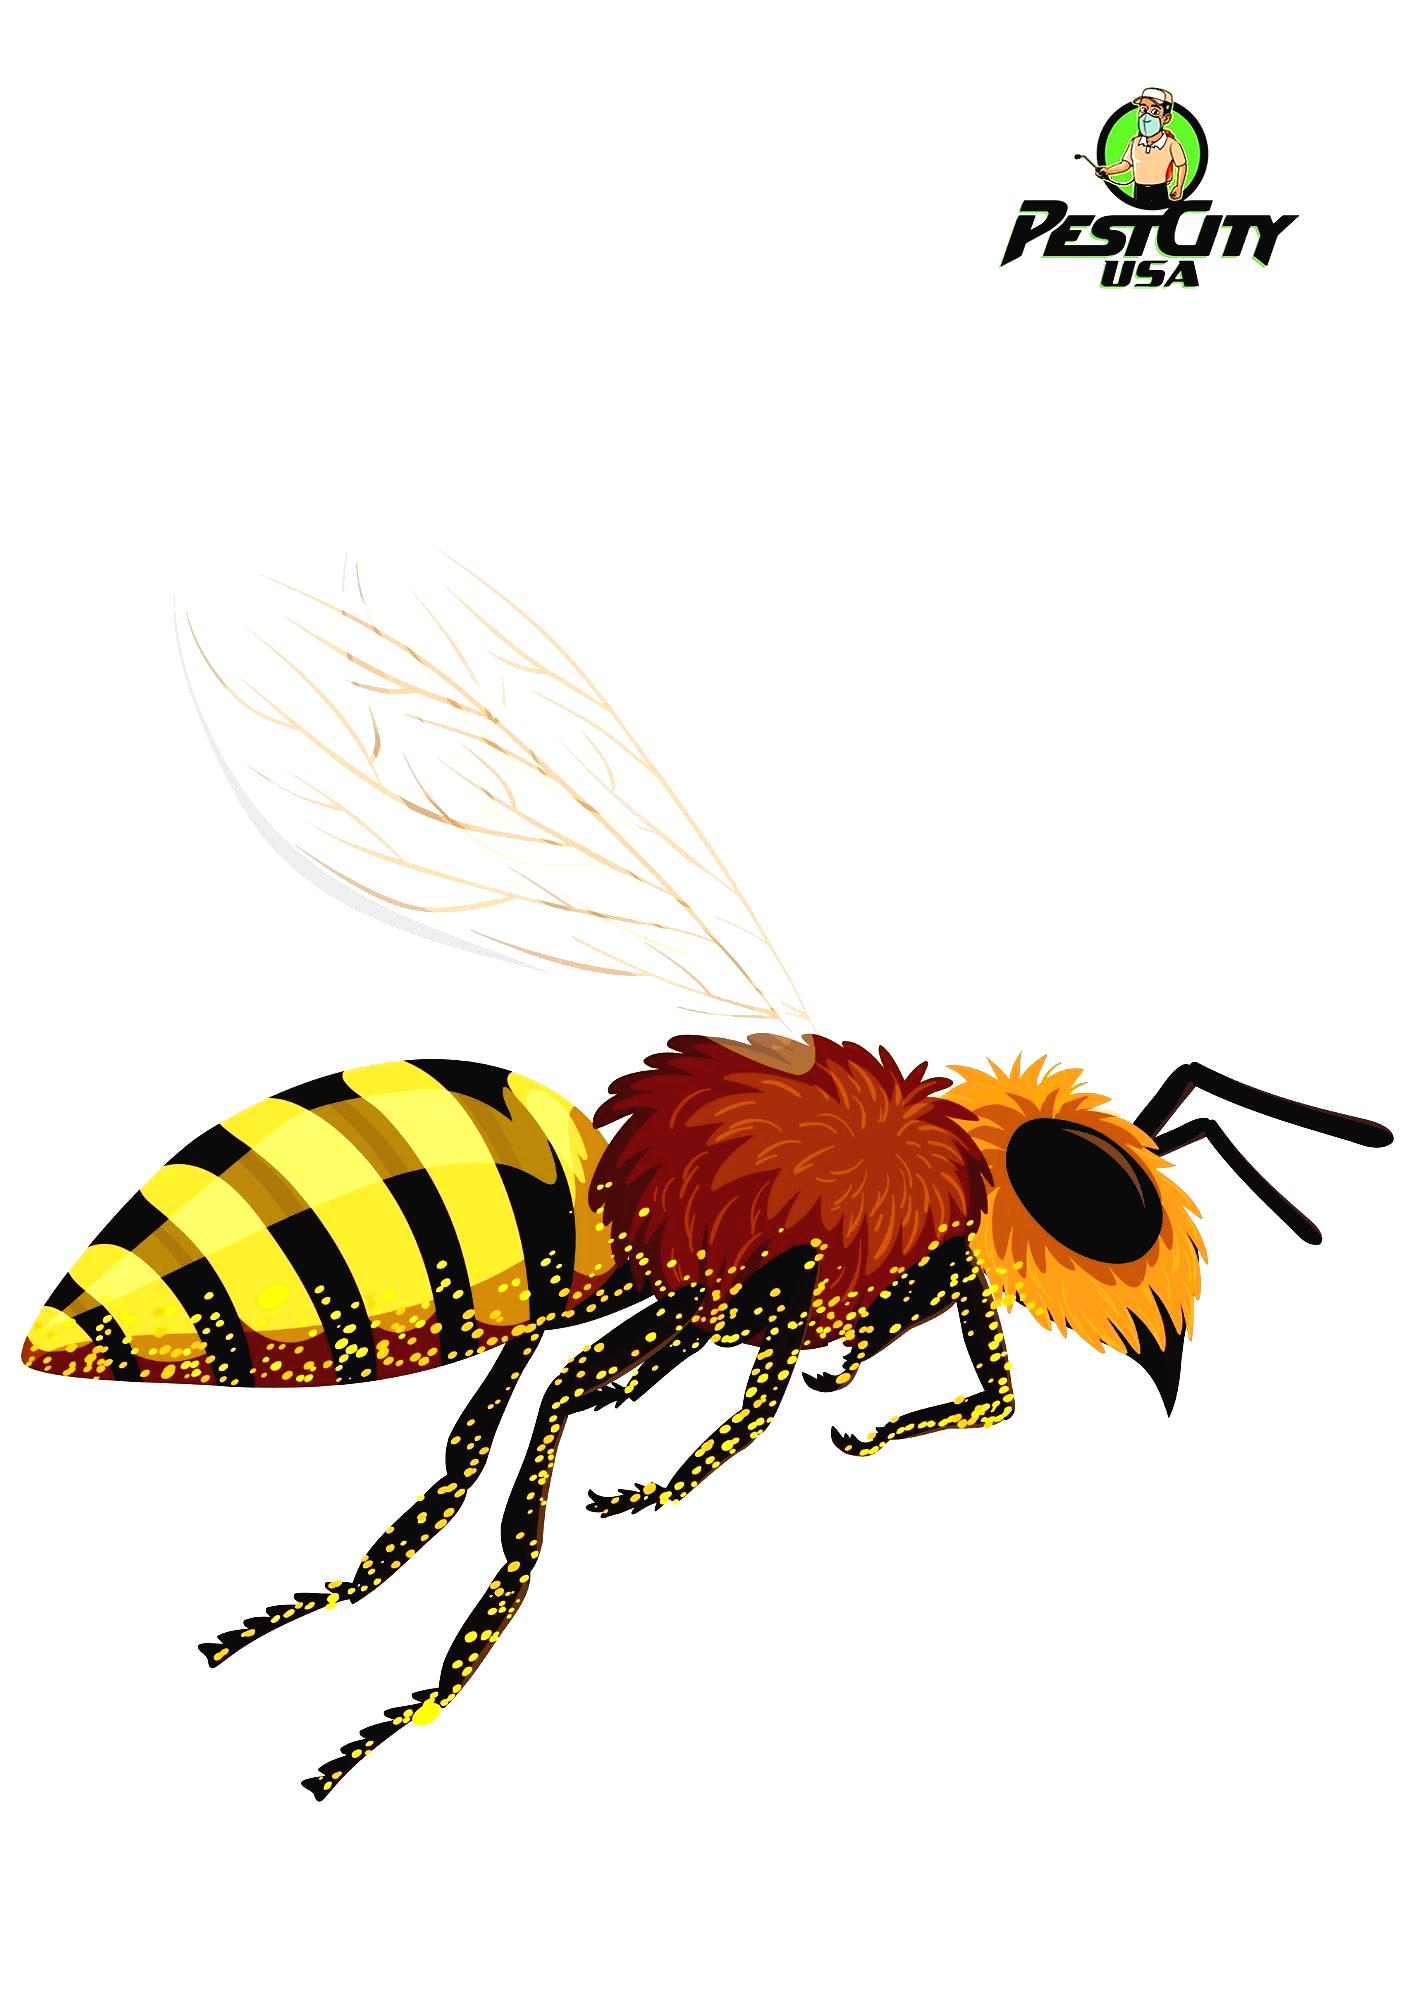 Detroit Honey Bee Pest Control Service- Pest City USA